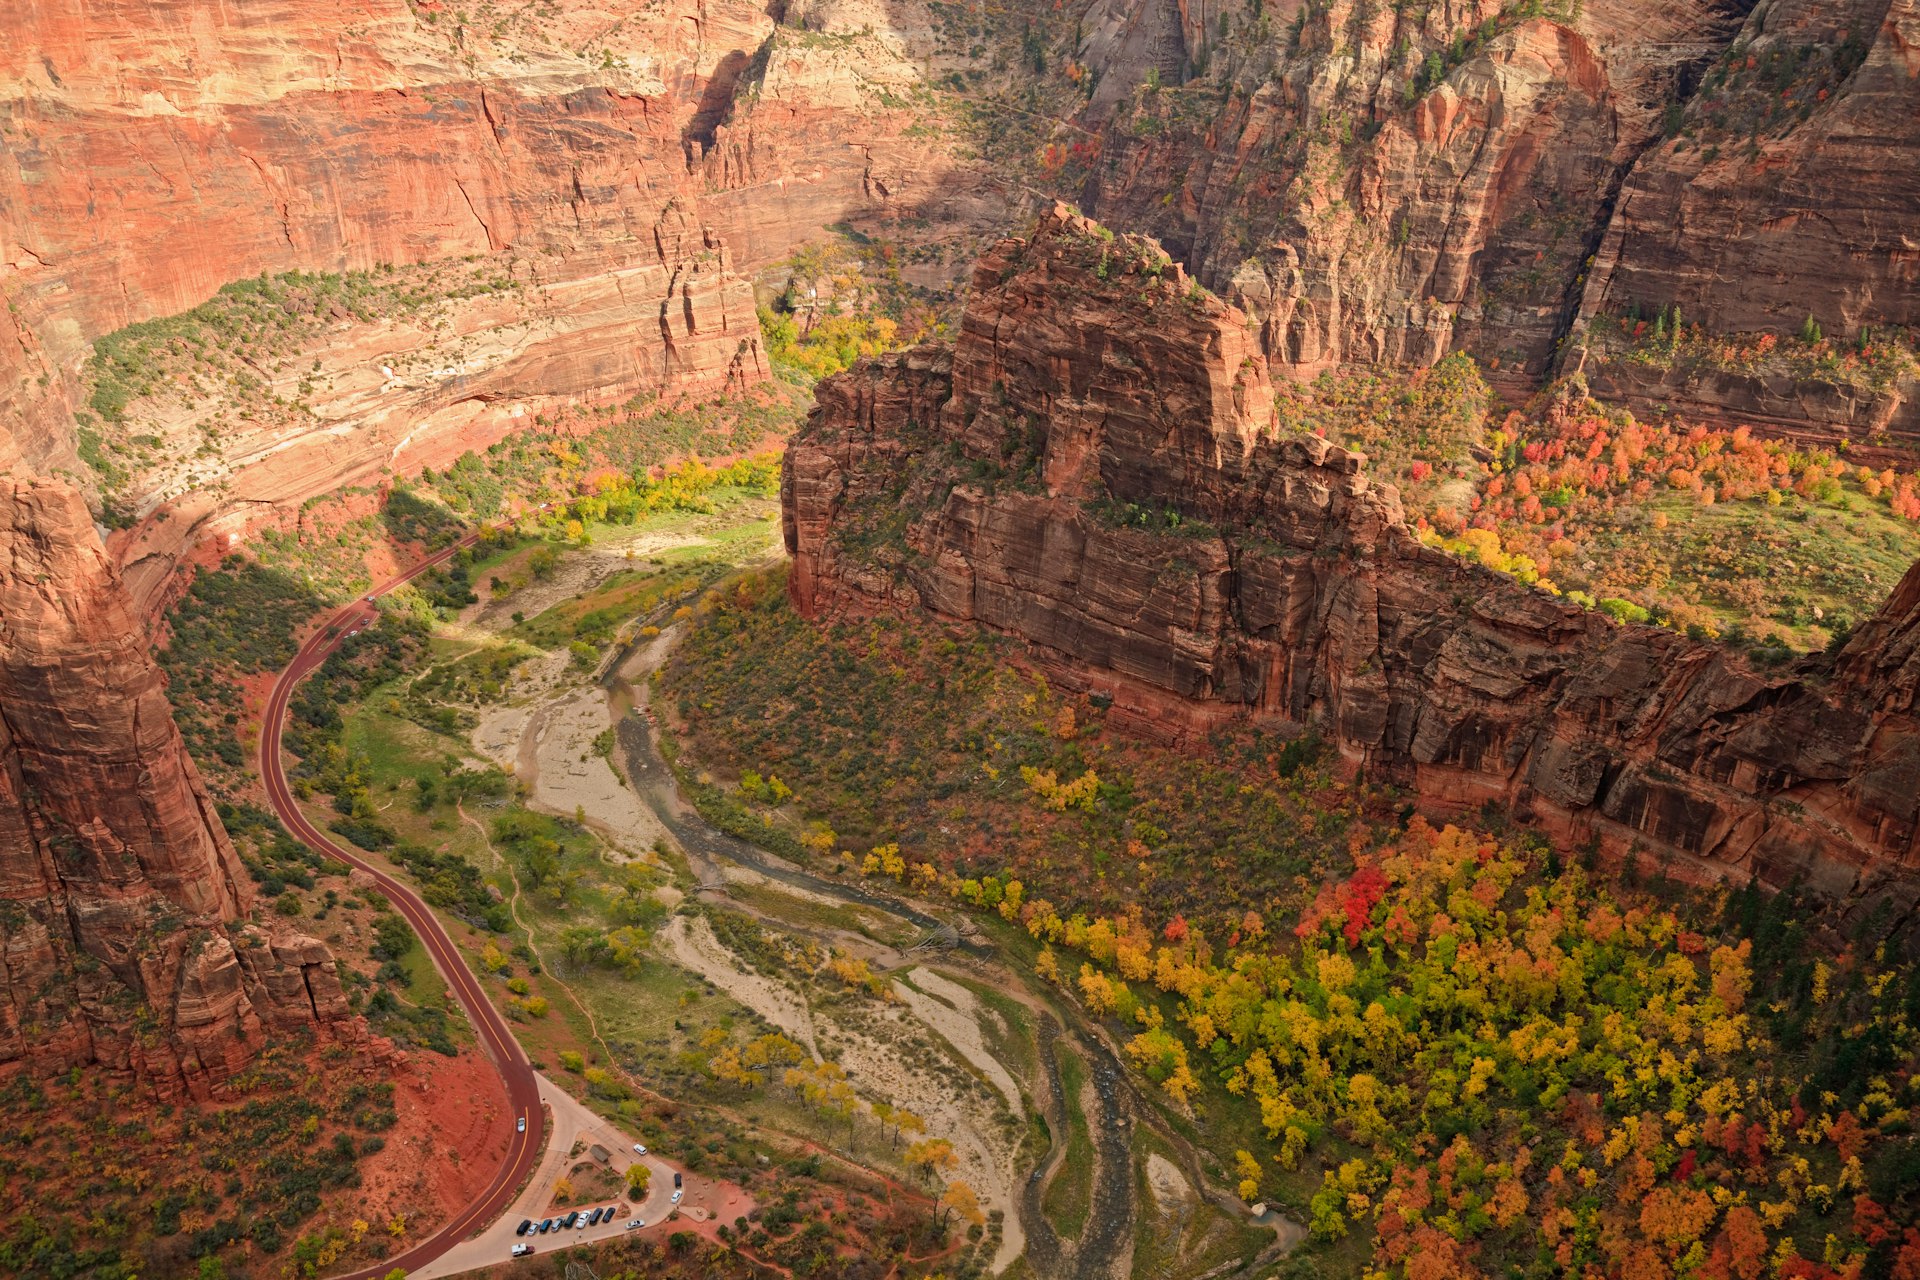 A high-angle view of a canyon